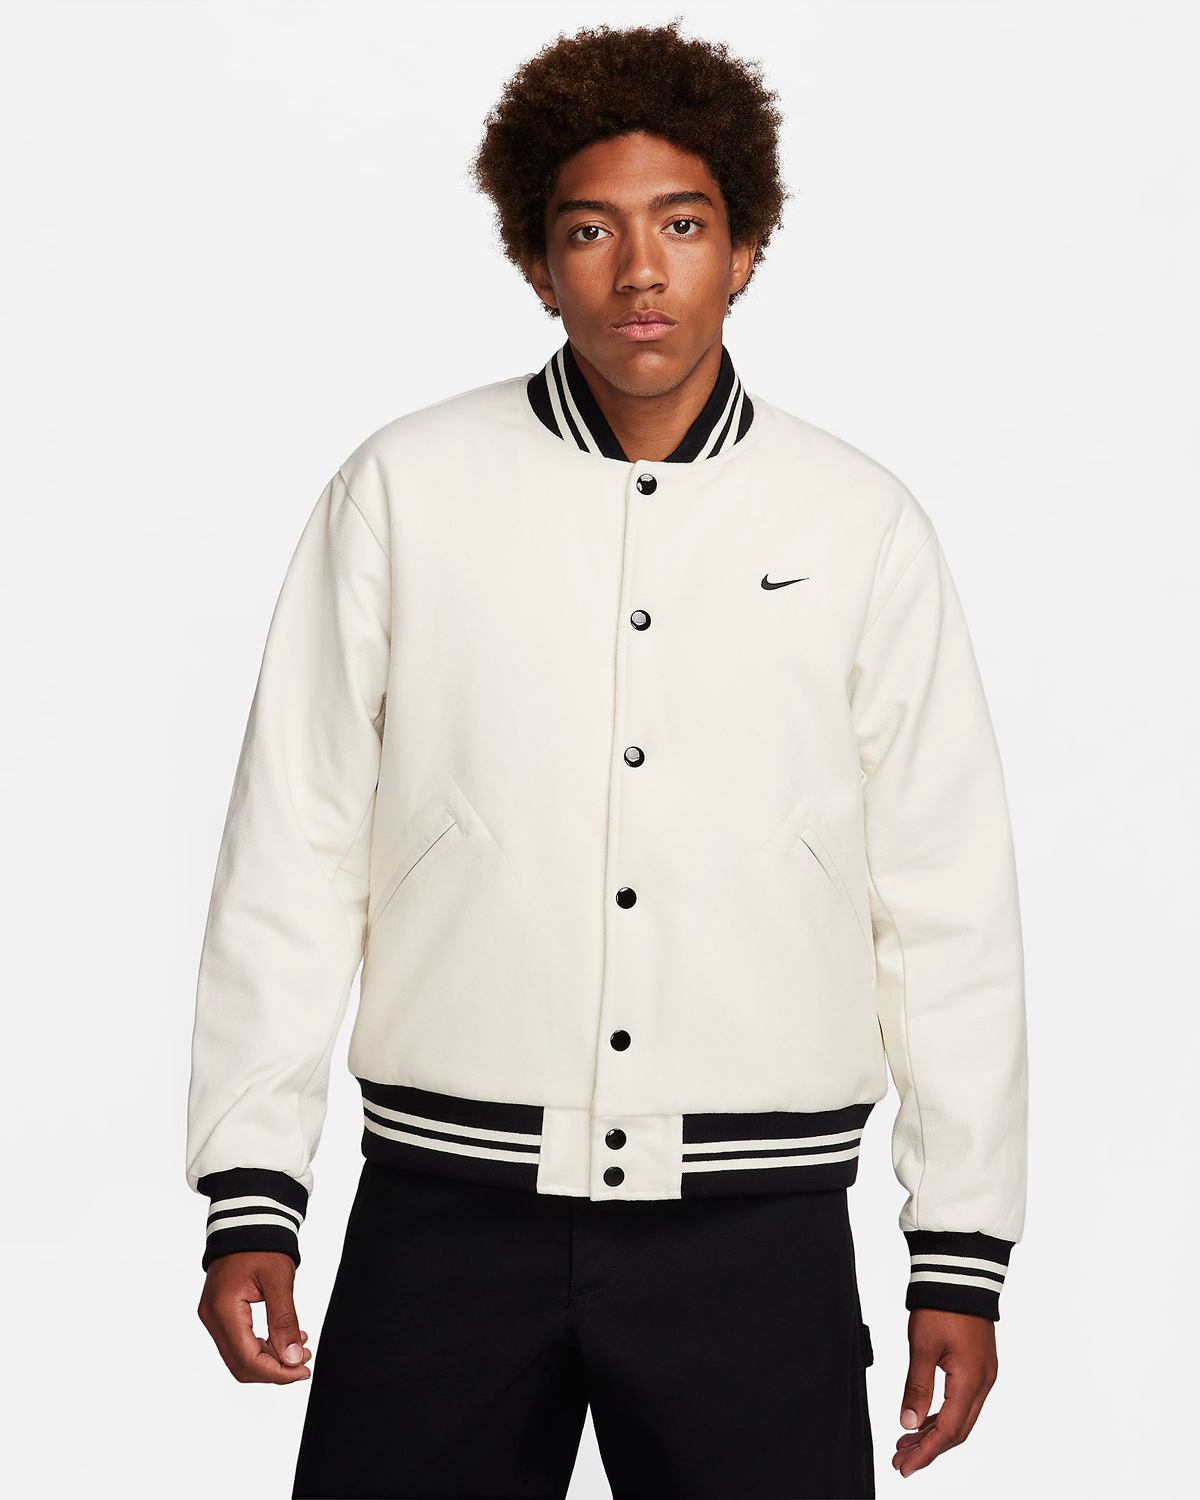 Nike-Authentics-Varsity-Jacket-Sail